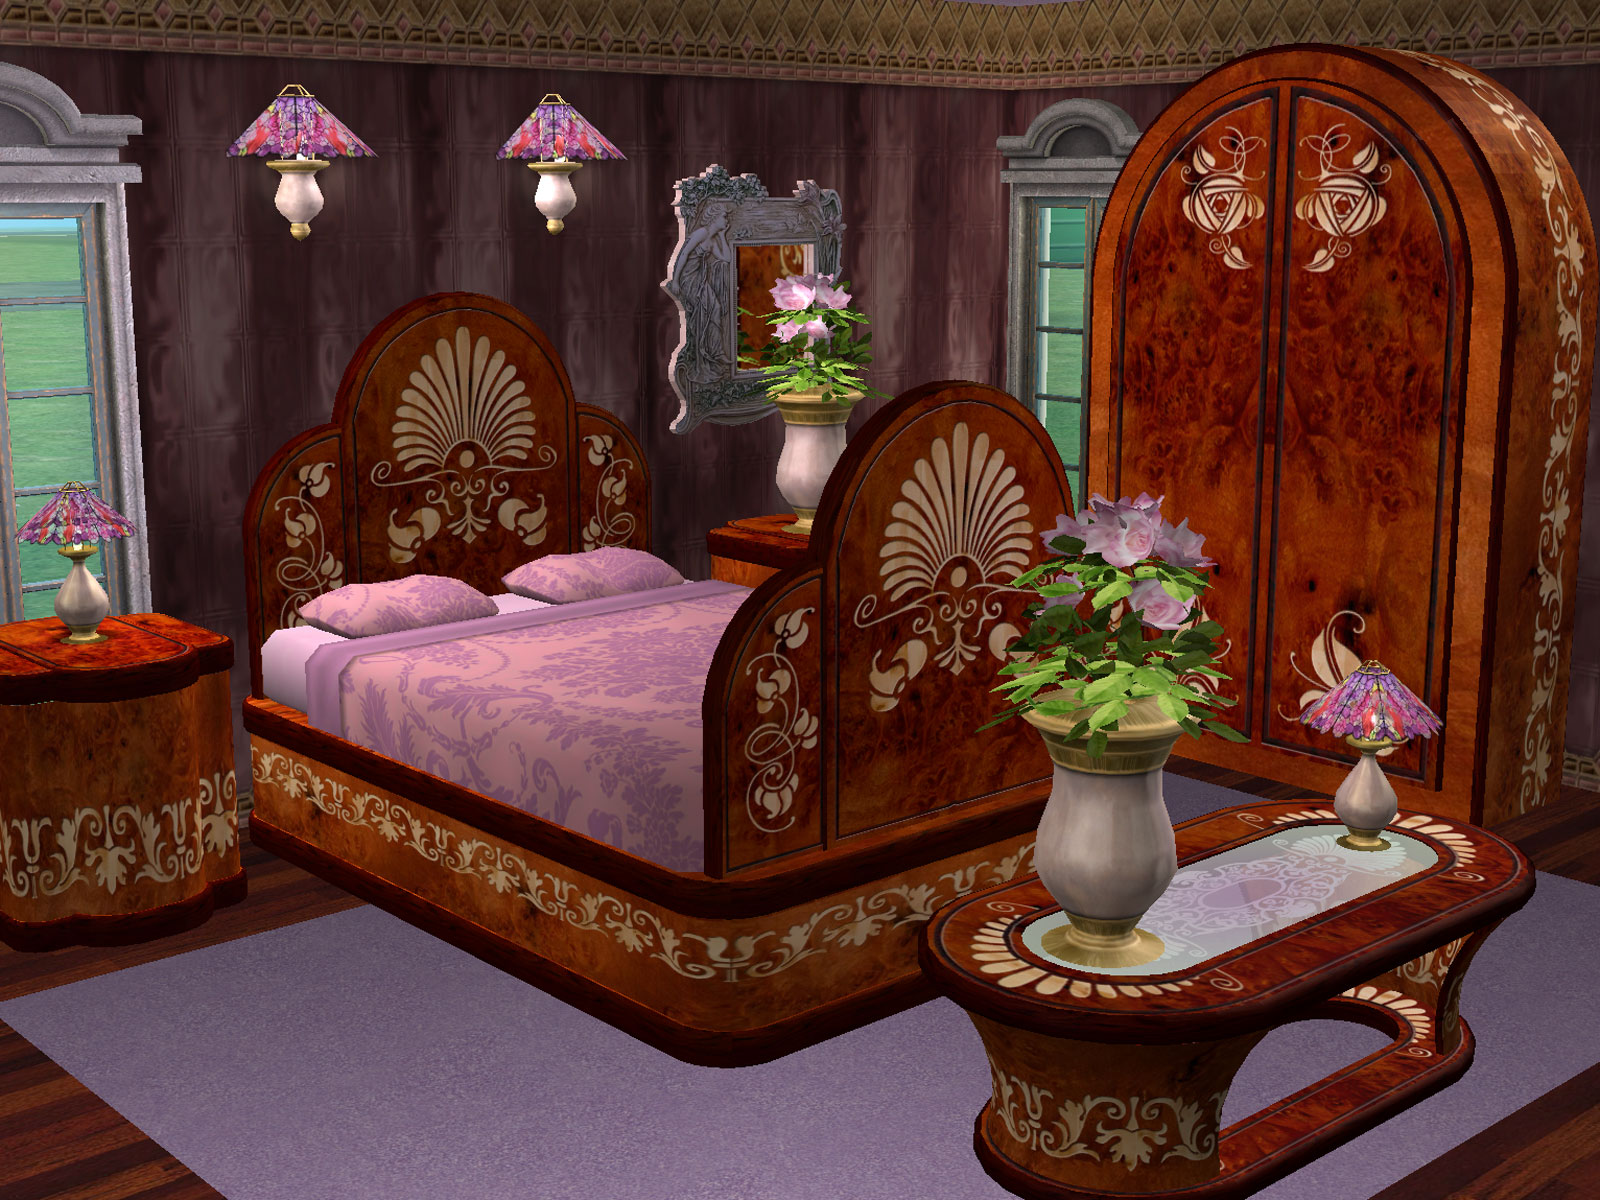 http://www.parsimonious.org/furniture2/files/k8-Mayfair_Bedroom.jpg